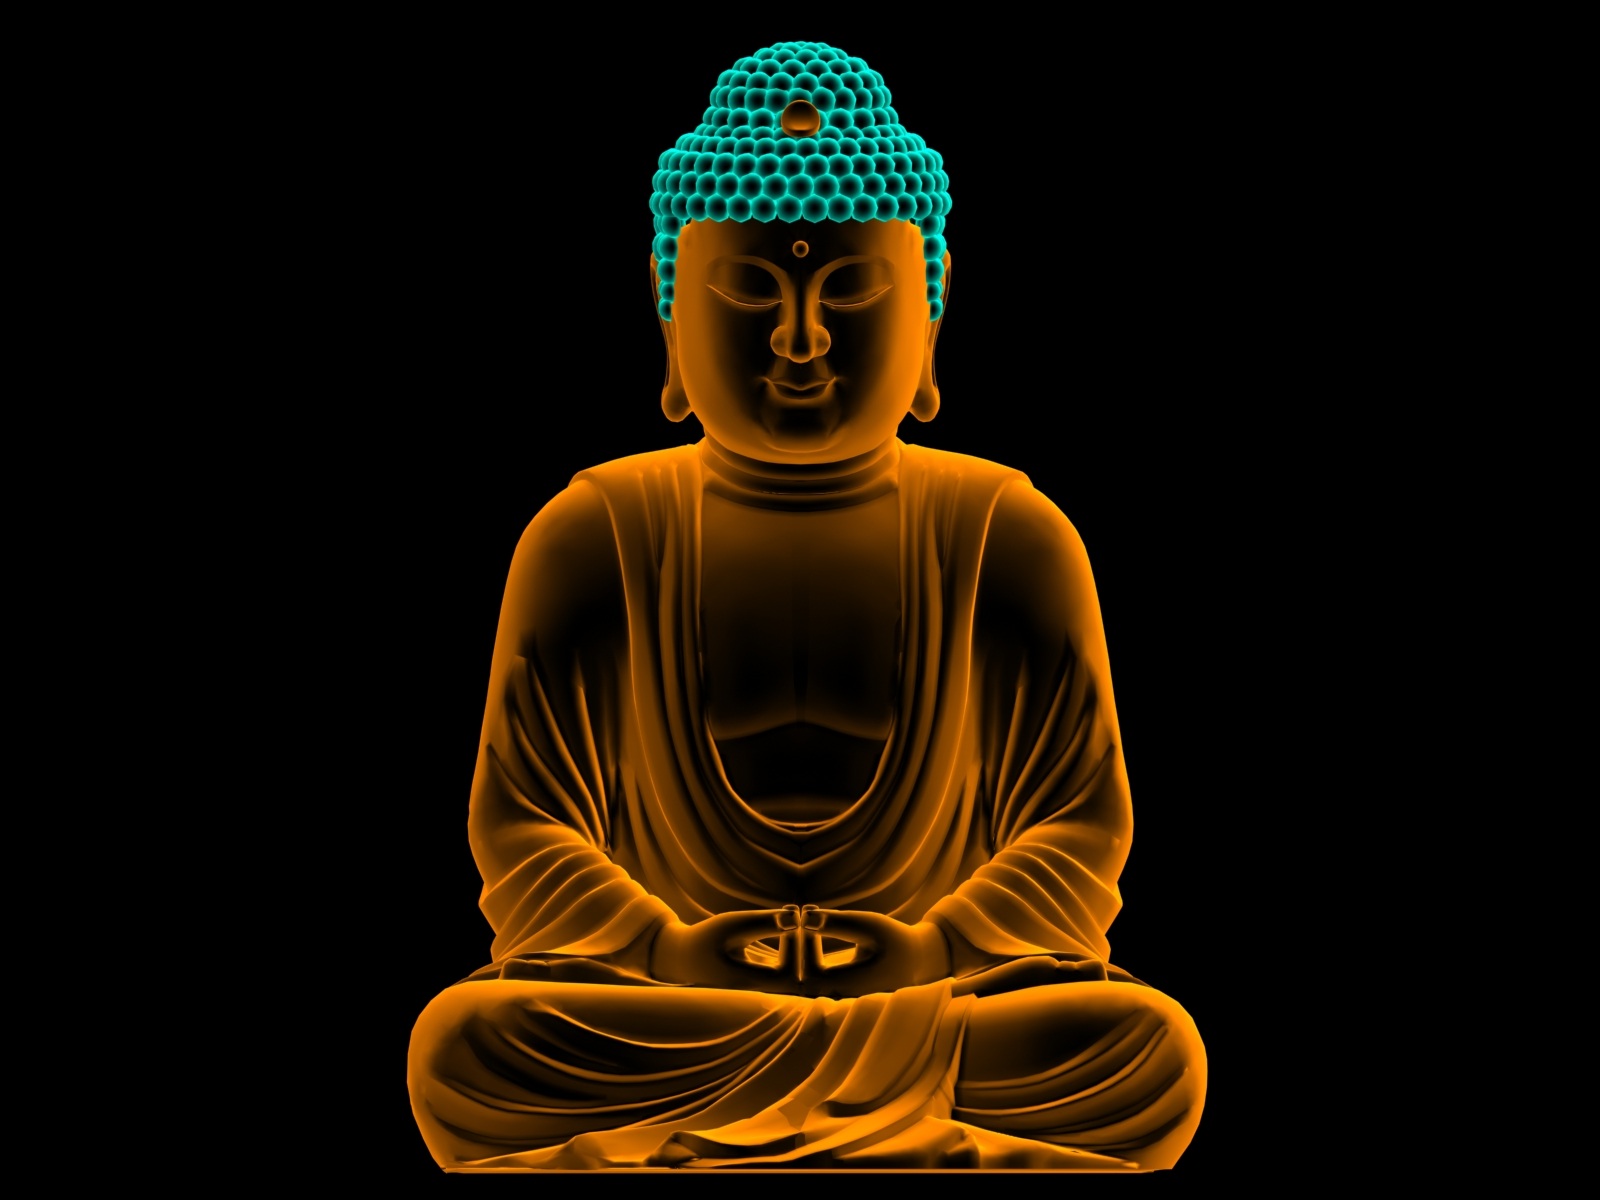 HD Wallpaper Image For Lord Buddha